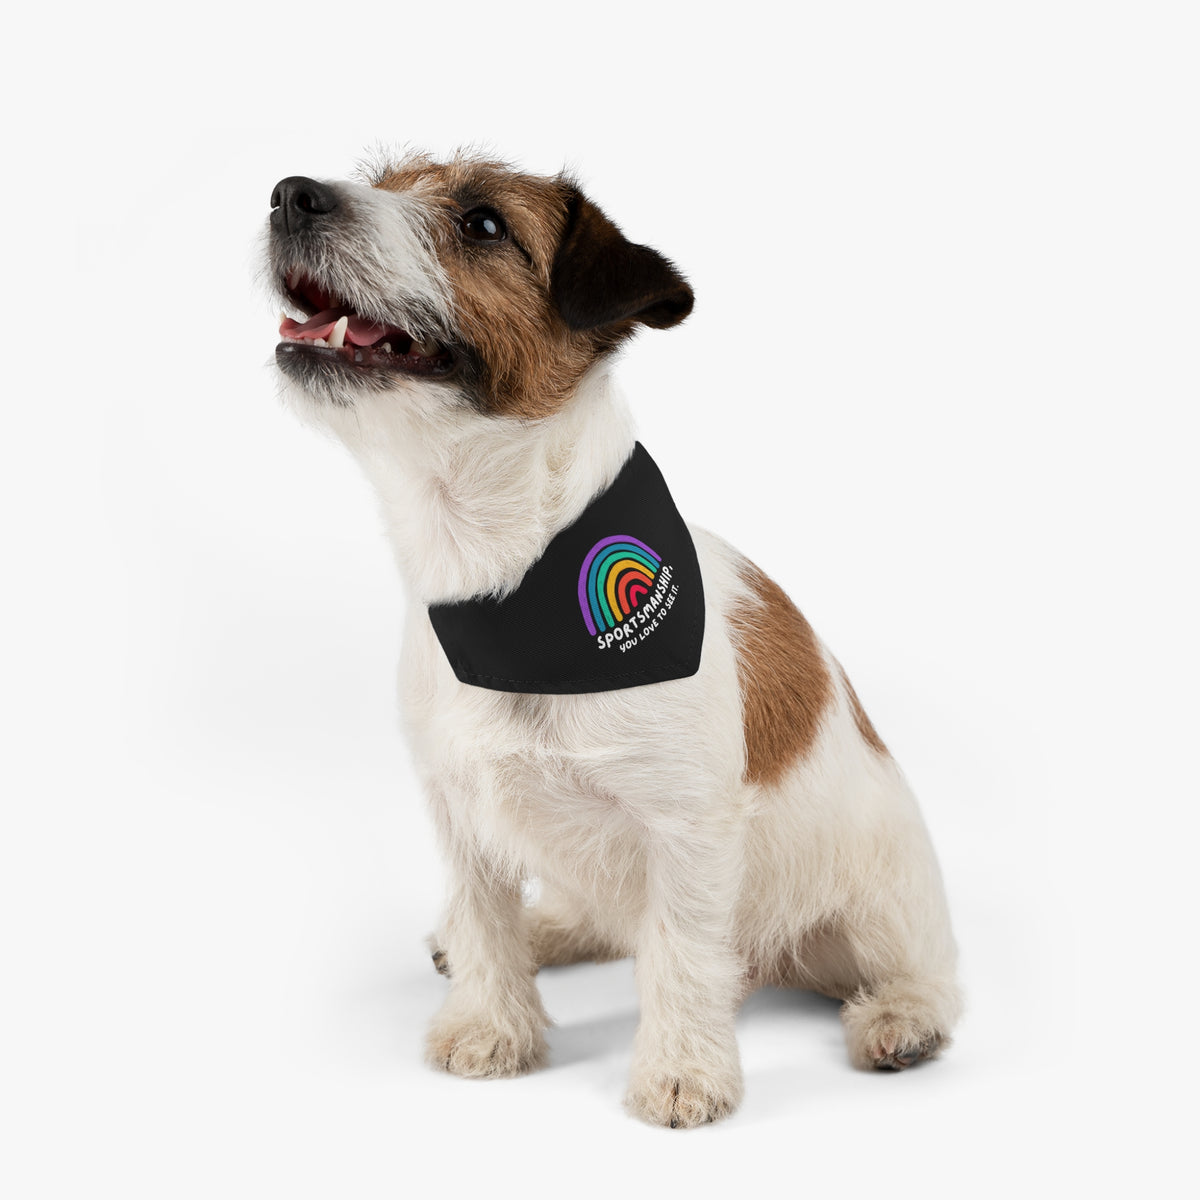 Sportsmanship Rainbow Pride Pet Bandana Collar